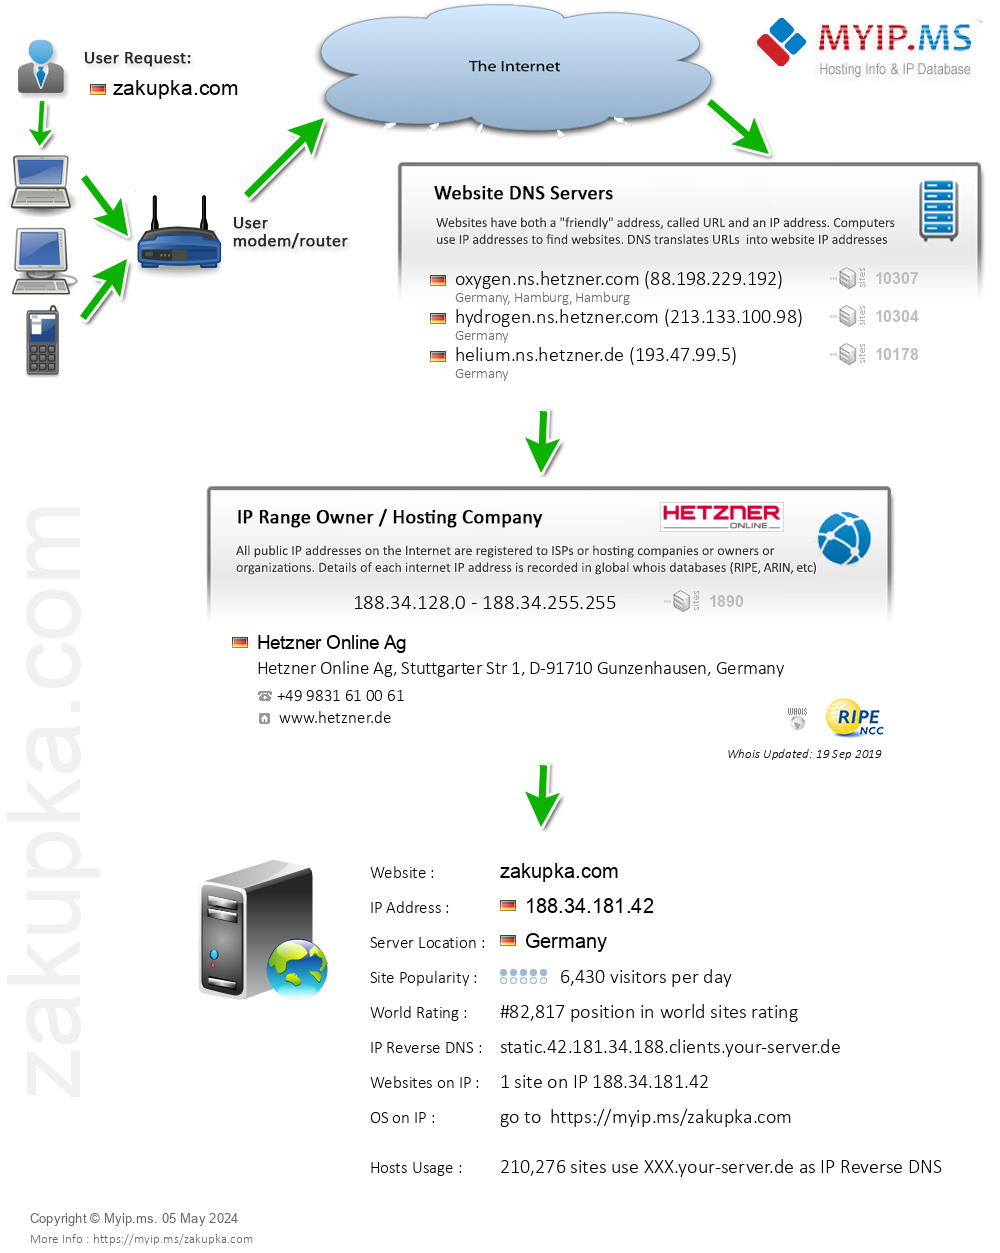 Zakupka.com - Website Hosting Visual IP Diagram